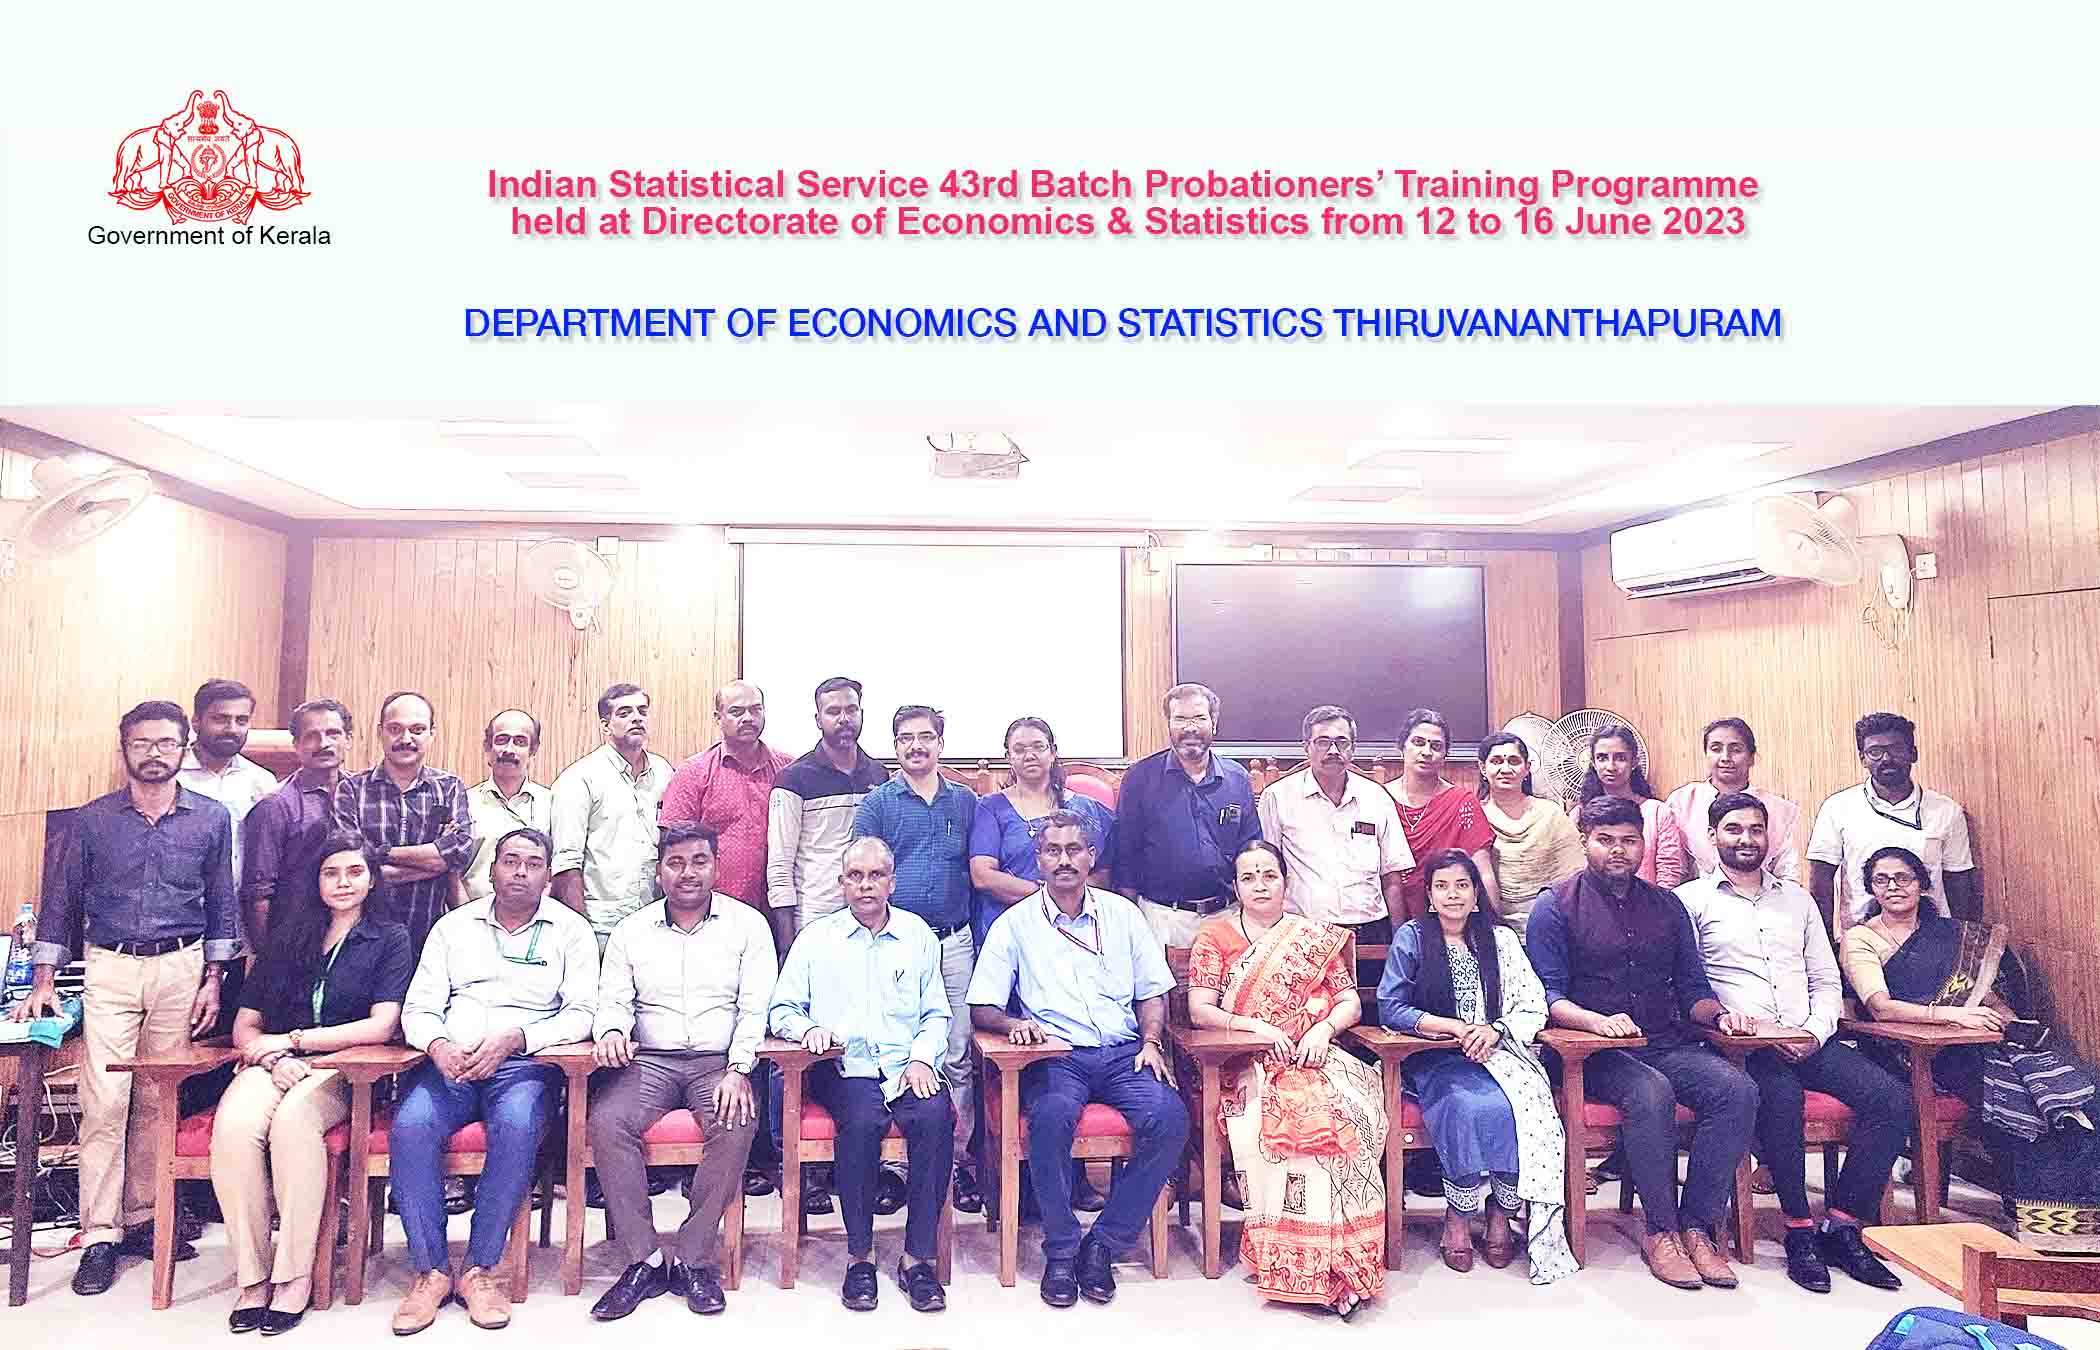 ISS 43rd batch Probationers' training held at Directorate of Economics & Statistics Thiruvananthapuram